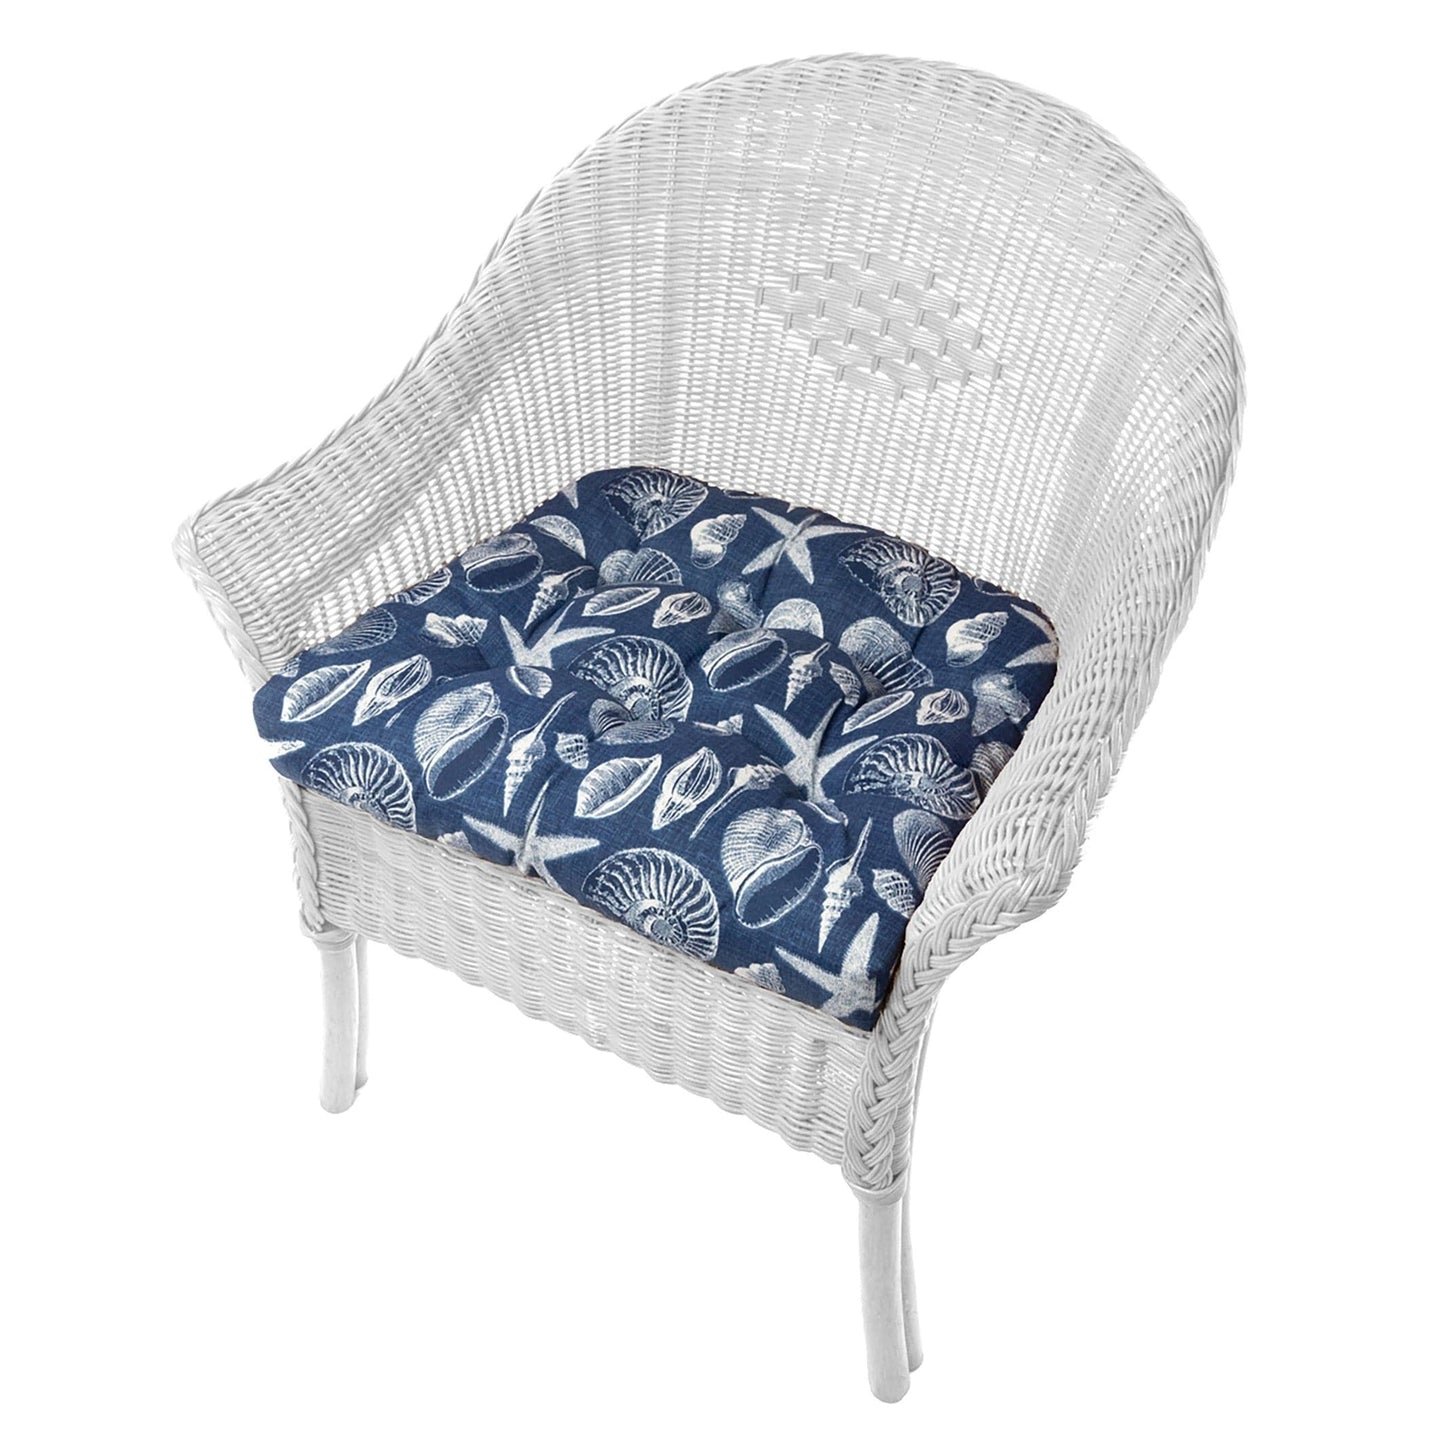 Shoreline Navy Blue Patio Chair Cushions | Wicker Chair Cushions - Adirondack Chair Cushions | Barnett Home Decor | Navy Blue & White | Aquatic | Oceanic | Coastal | Beach